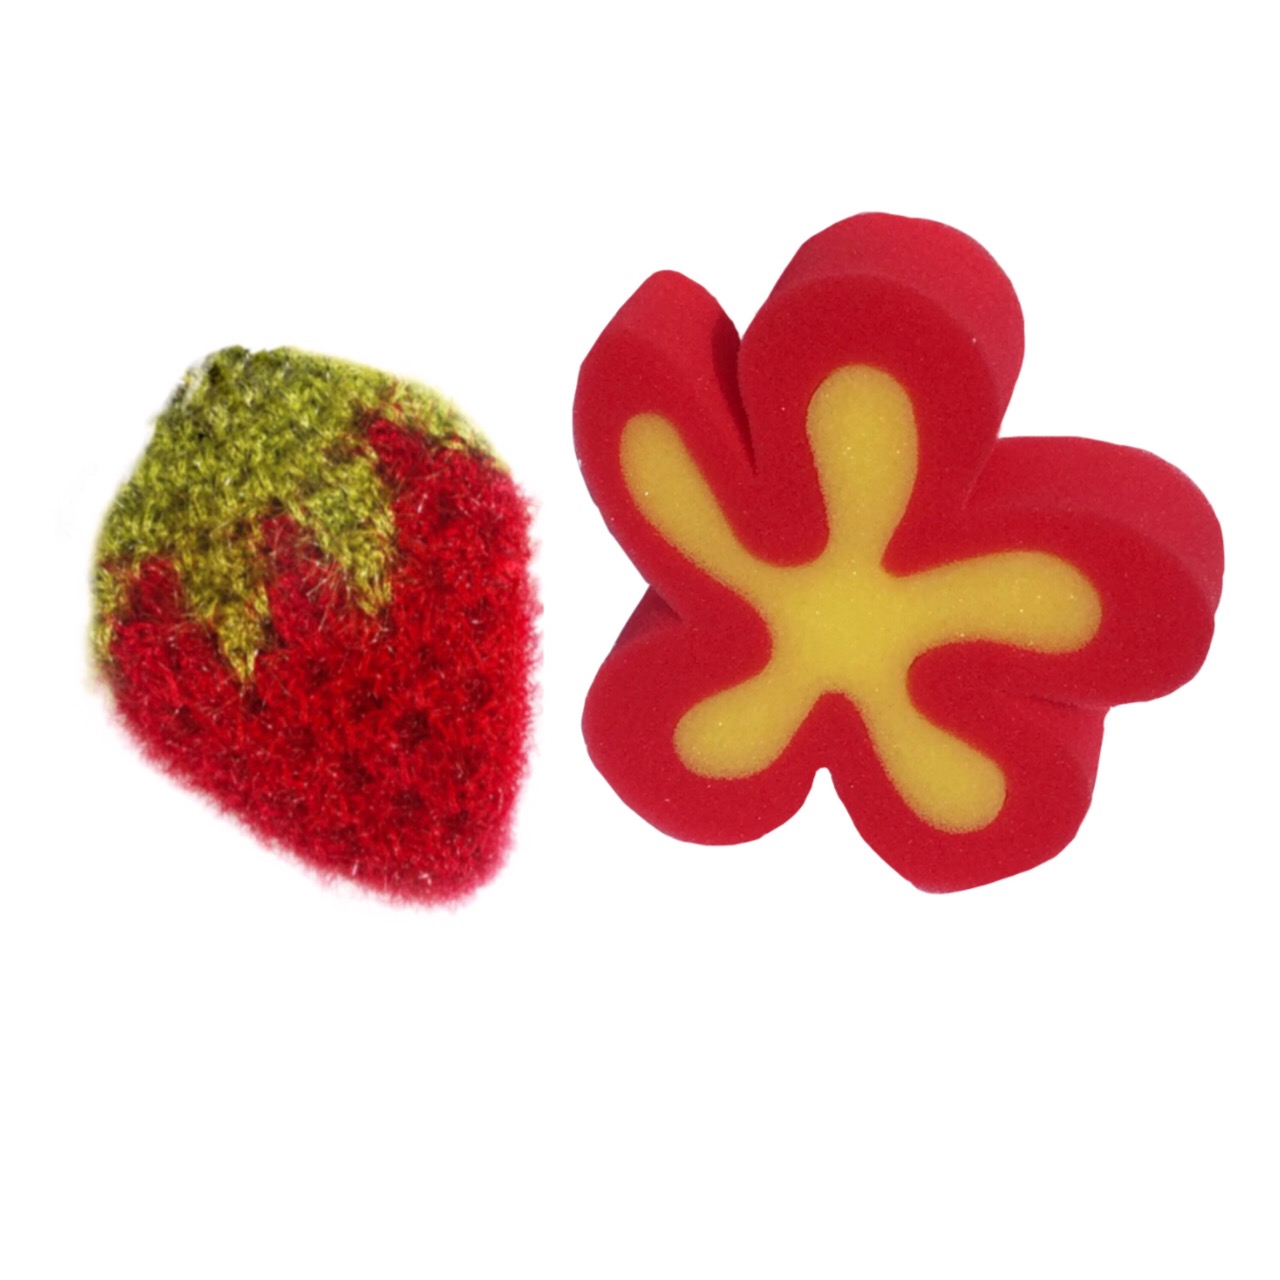 اسکاچ توت فرنگی به همراه اسفنج شستشوی مدل گل 